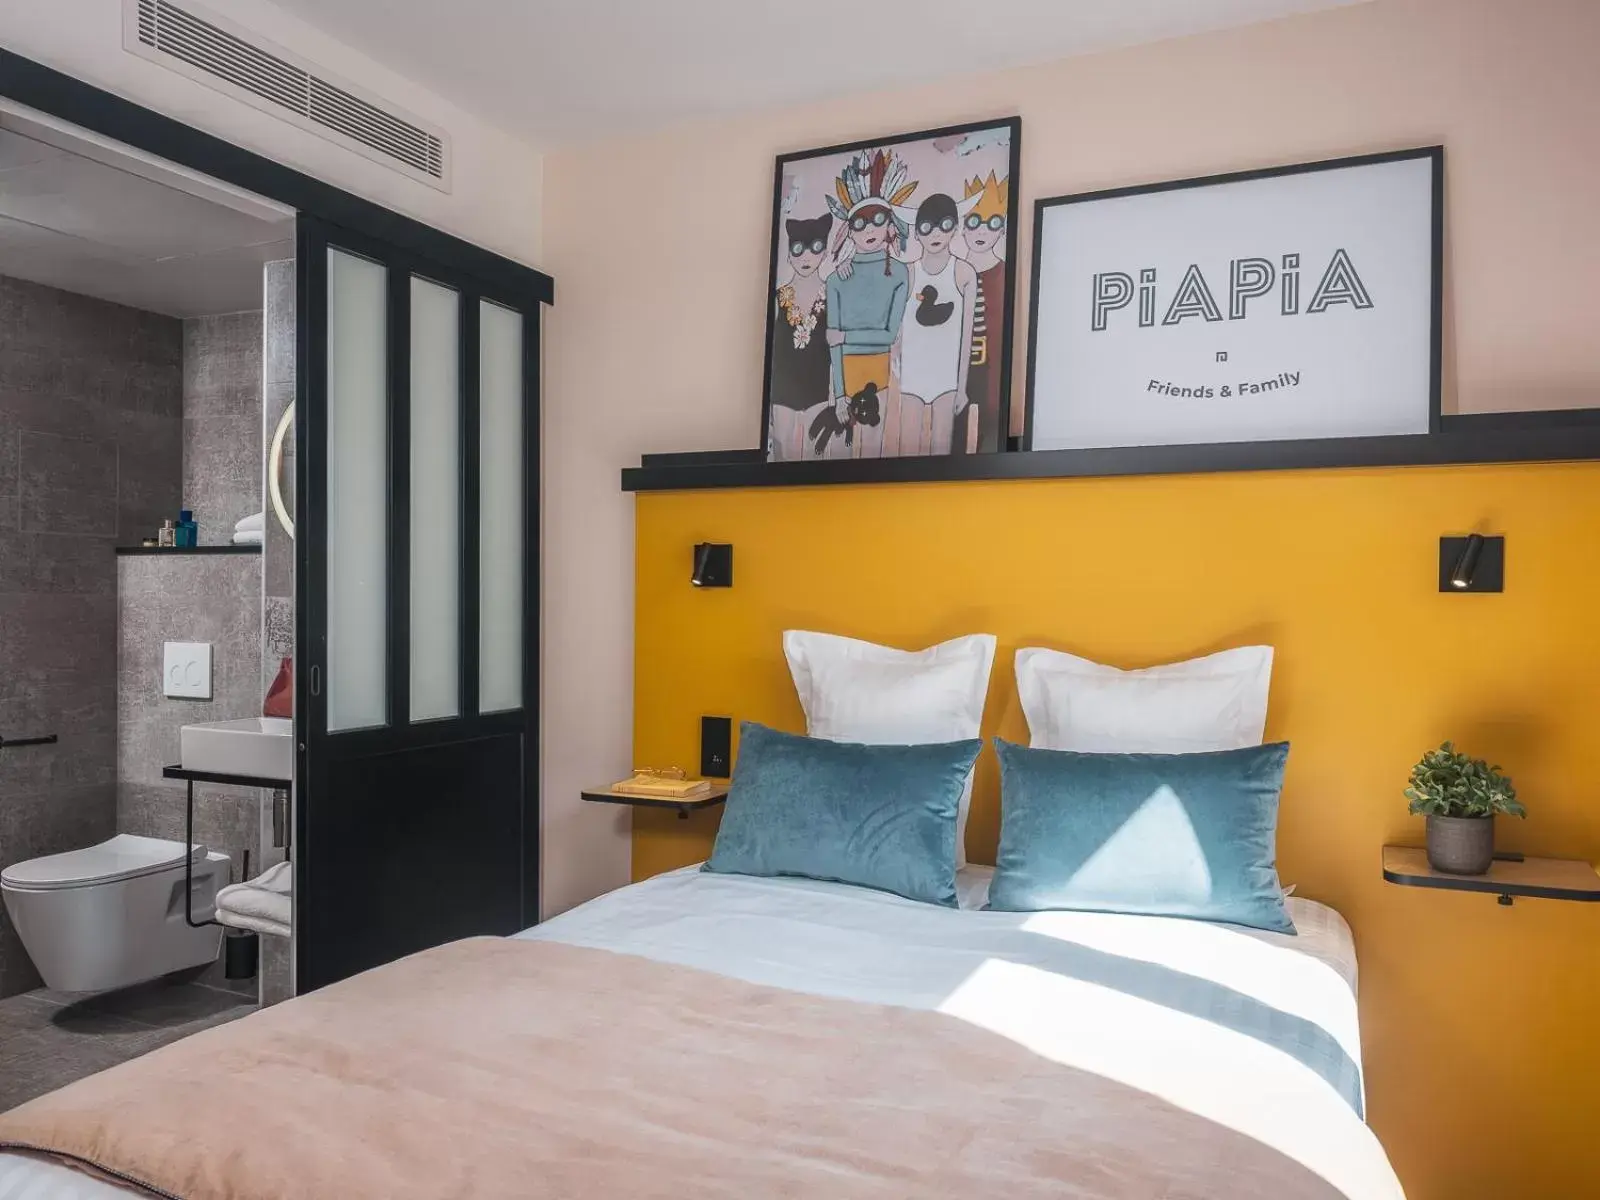 Bedroom, Bed in Hôtel Piapia